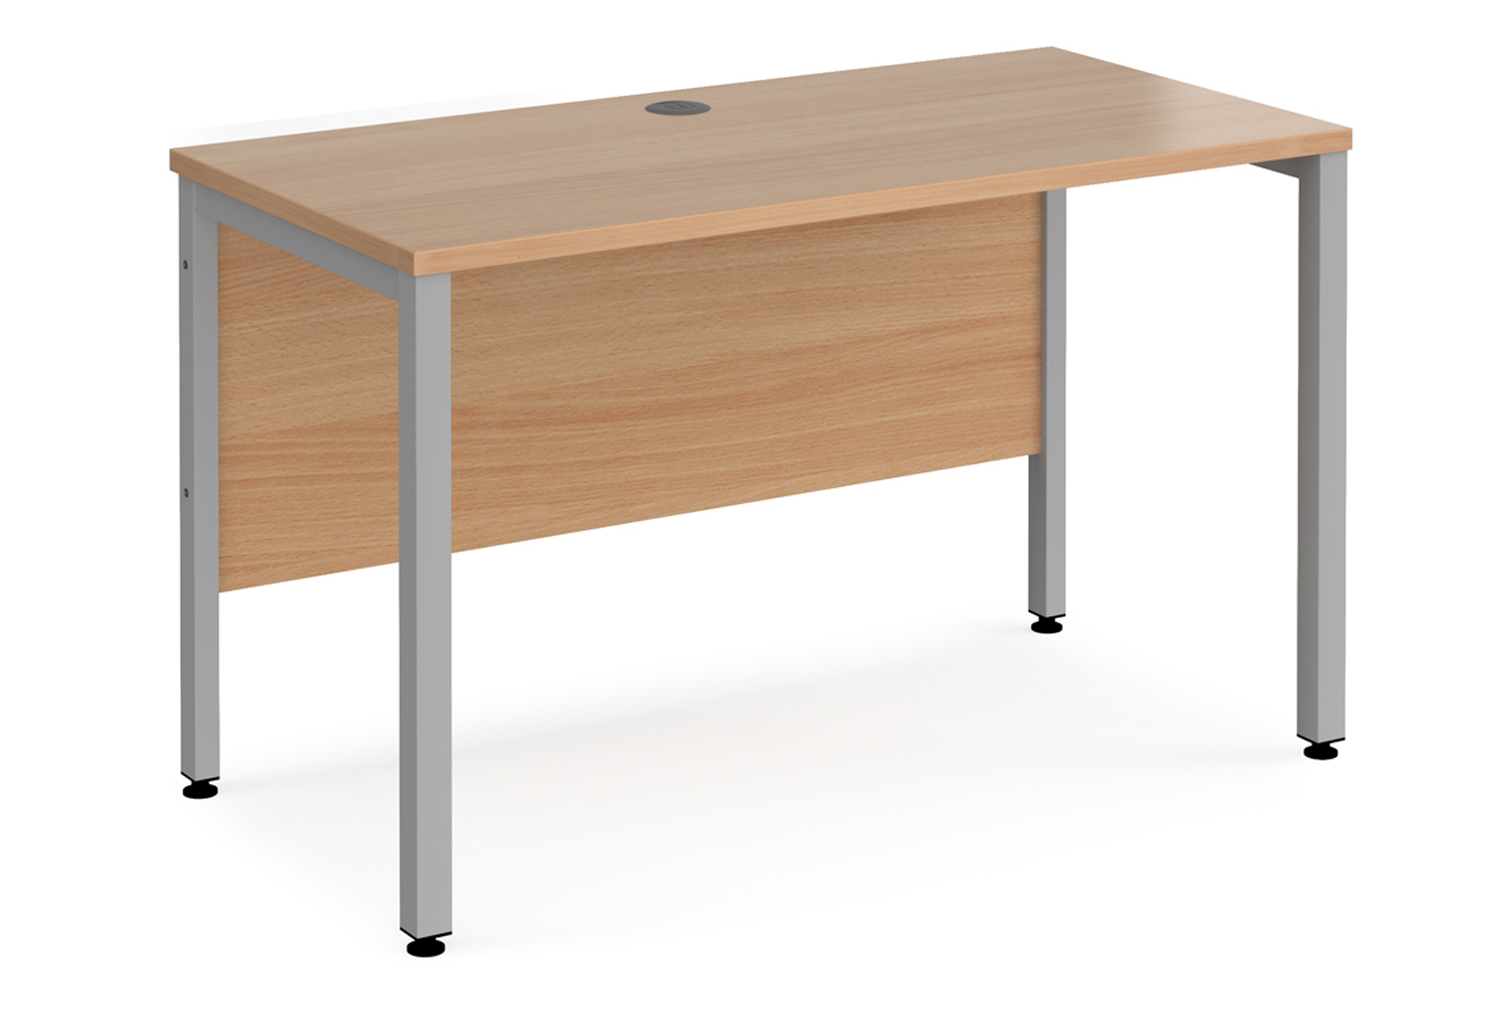 Value Line Deluxe Bench Narrow Rectangular Office Desks (Silver Legs), 120w60dx73h (cm), Beech